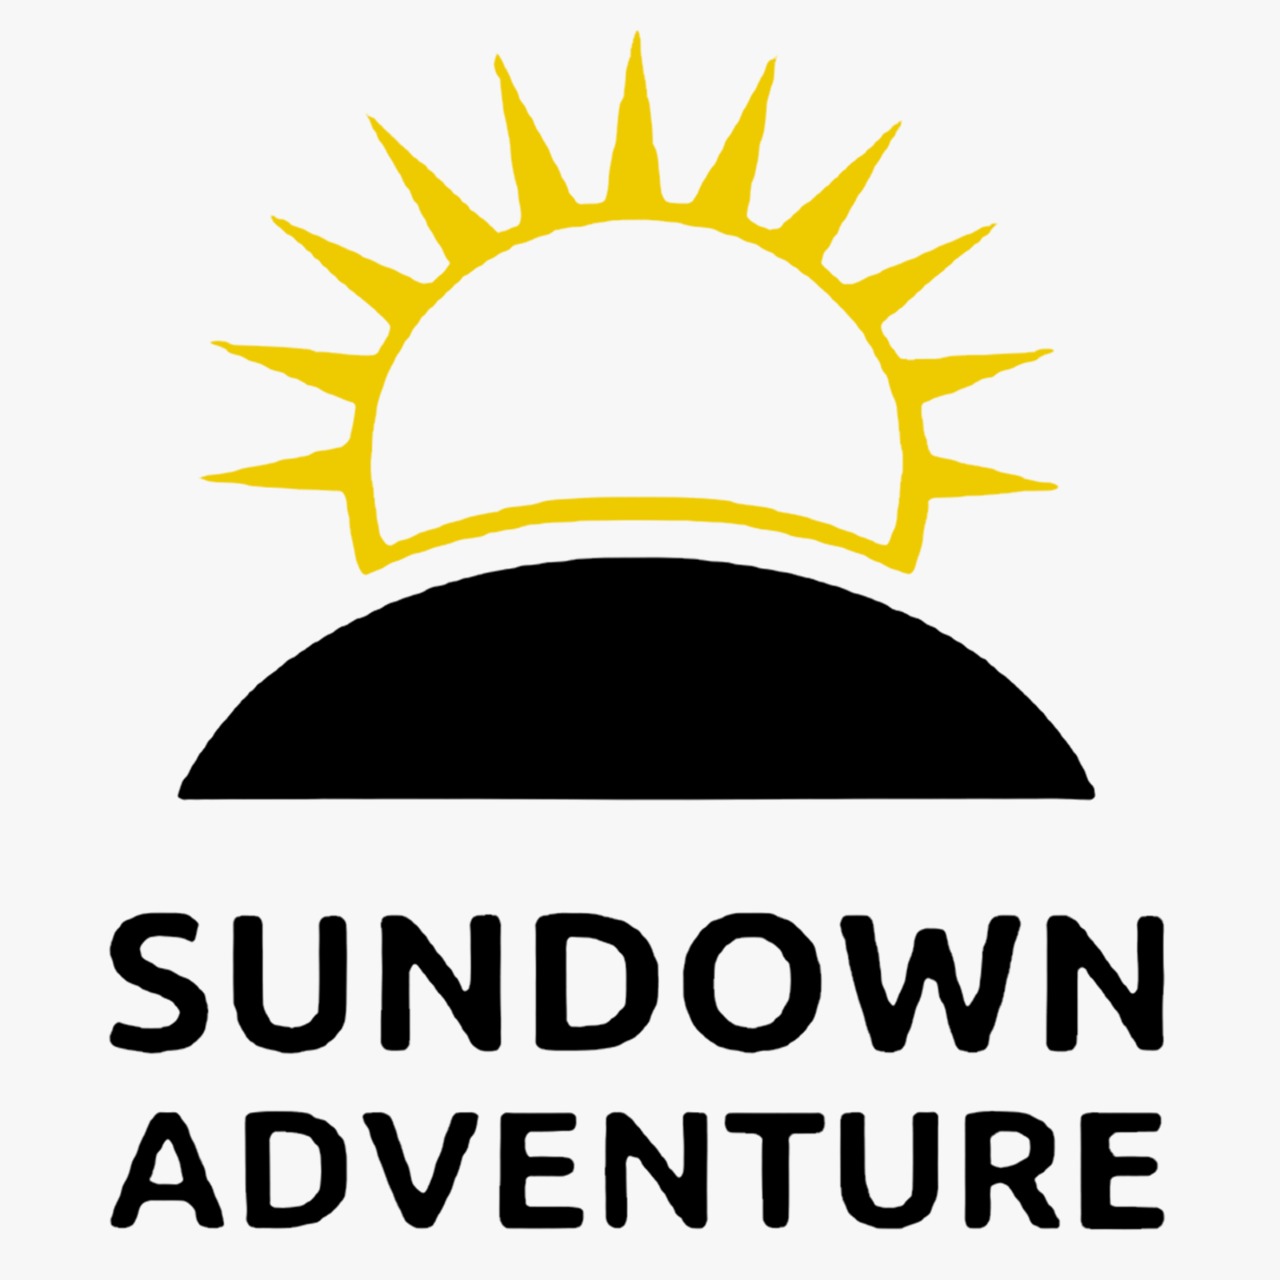 Sundown Adventure: Popular Travel Blogs